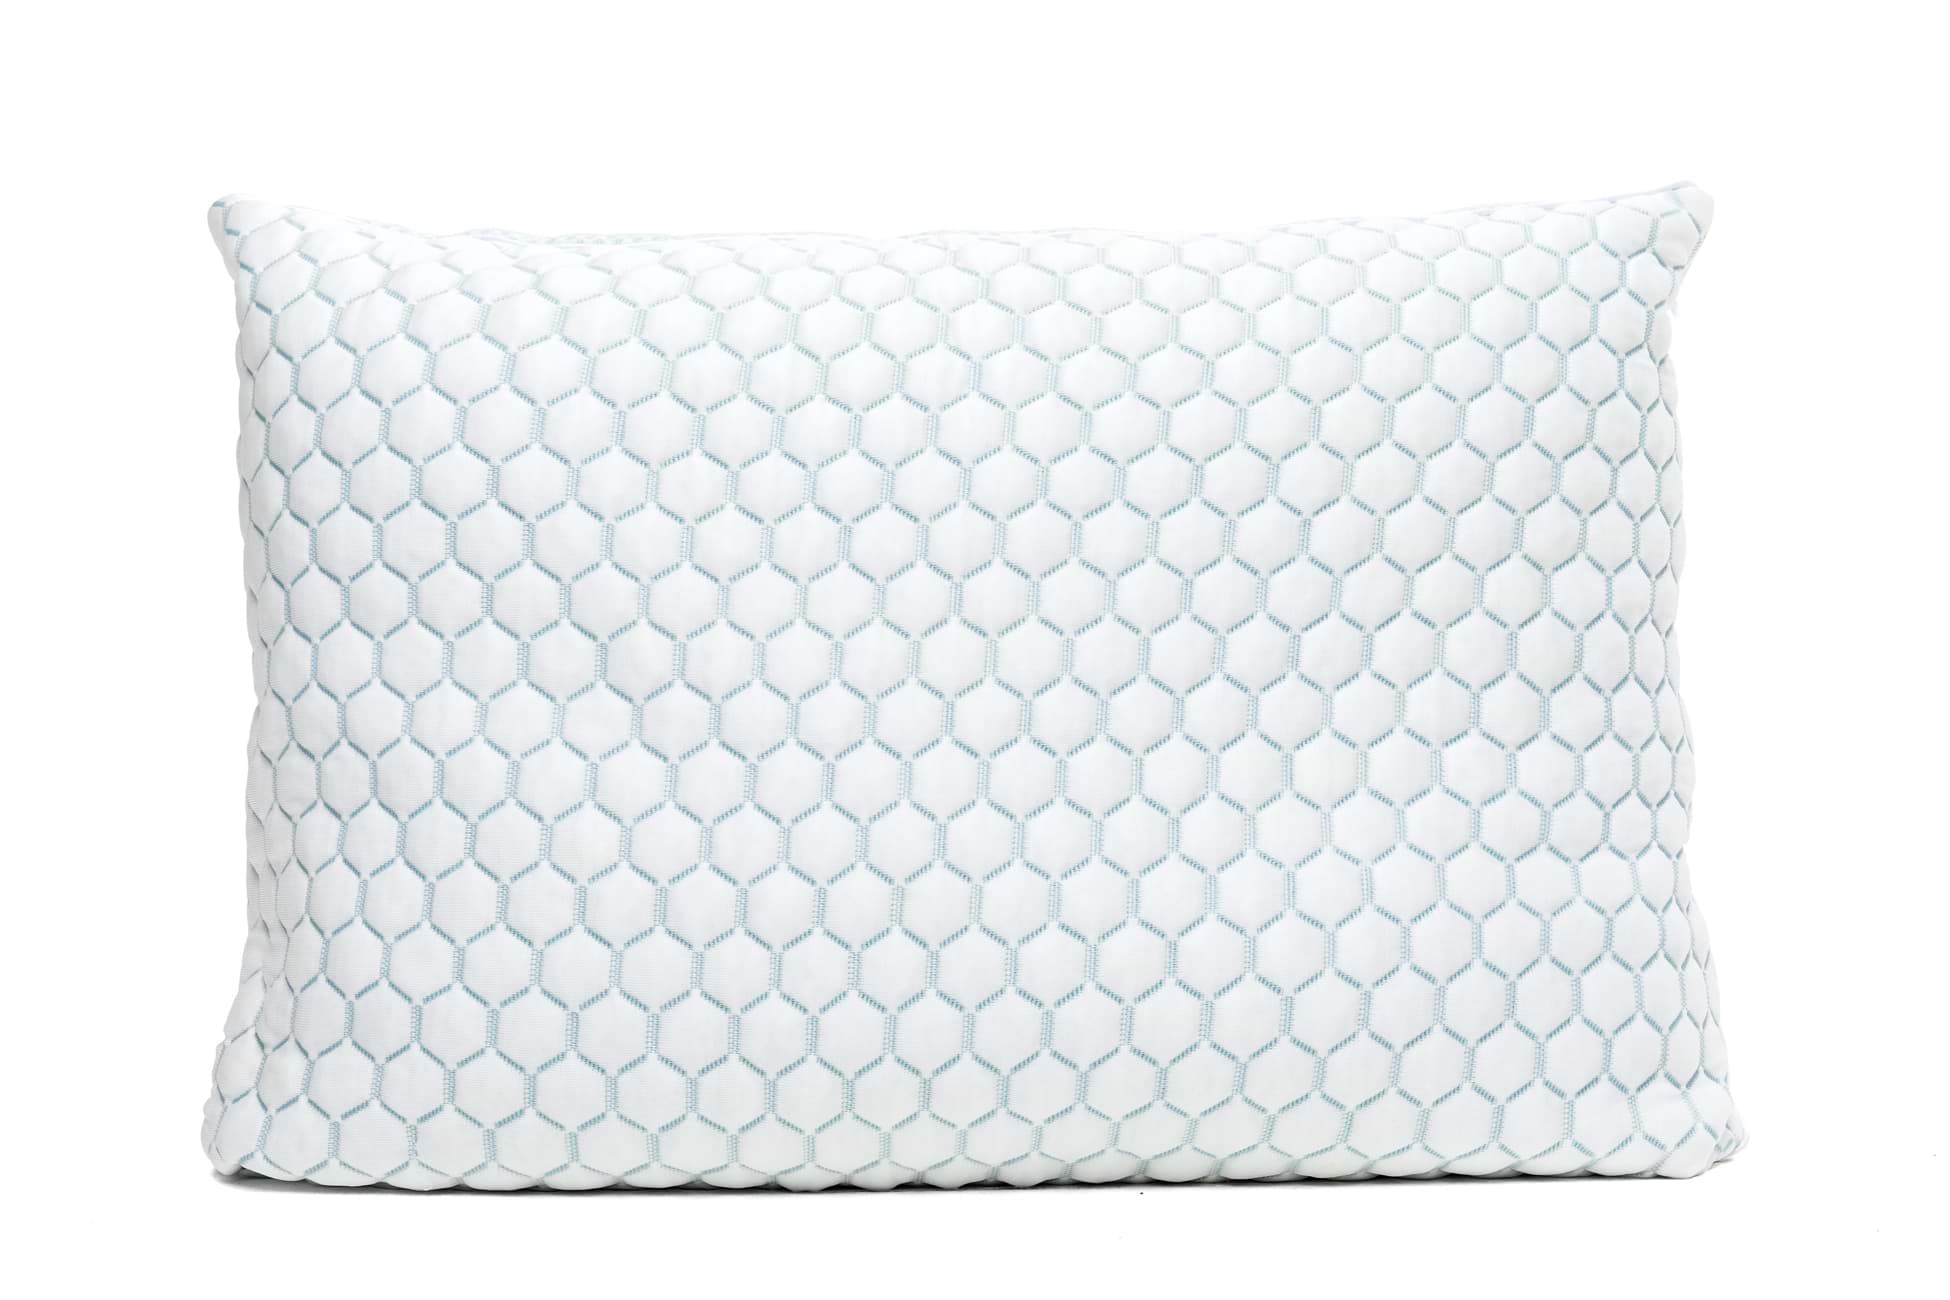 Image of Infinity PRO Adjustable Foam Pillow